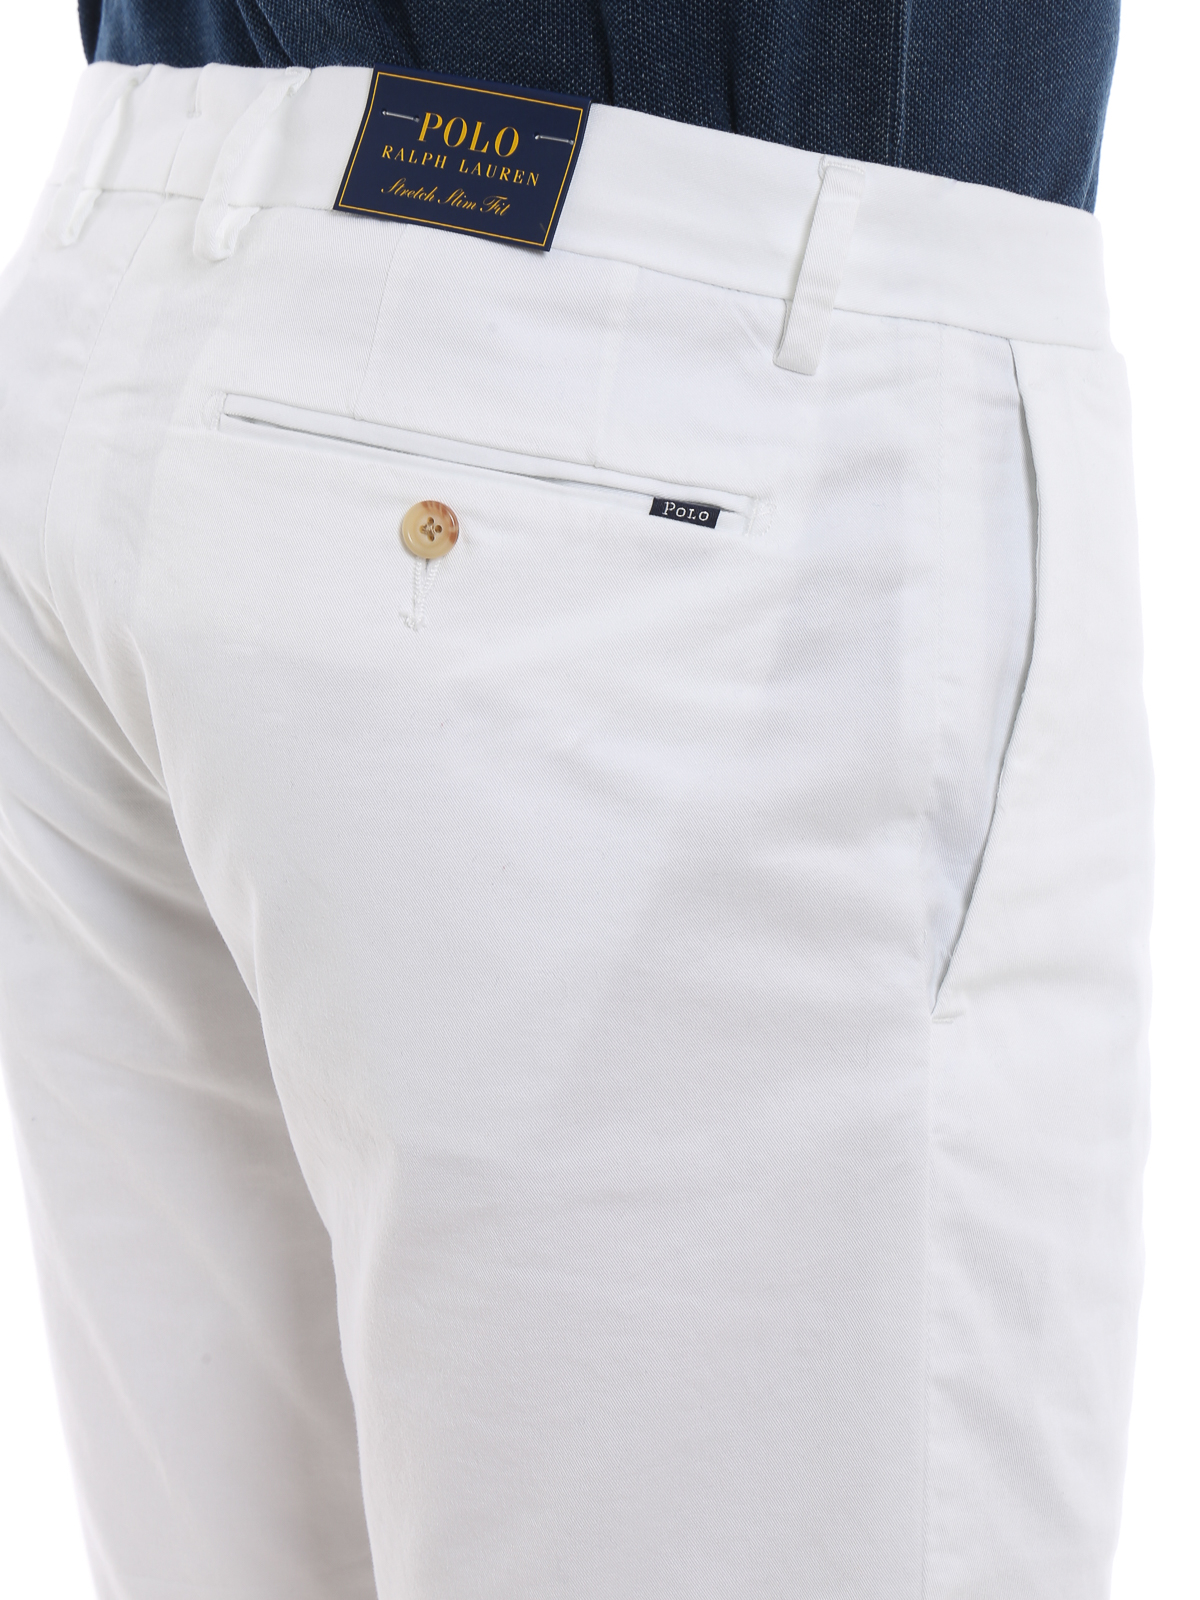 polo ralph lauren white shorts